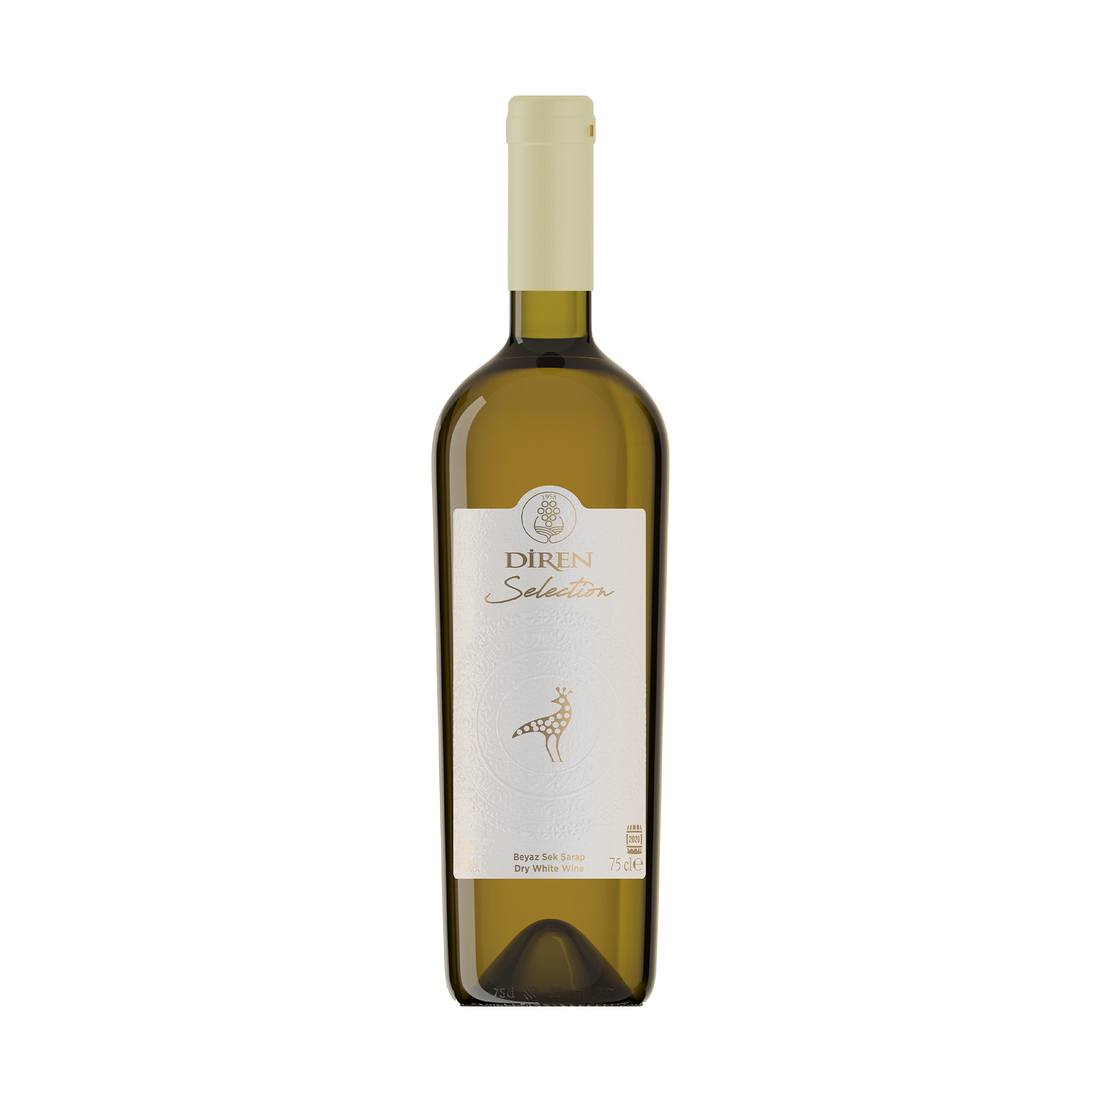 Diren Selection White 750ml Dry Turkish White Wine | Diren Selection Beyaz Sek Sarap | Dry White Wine